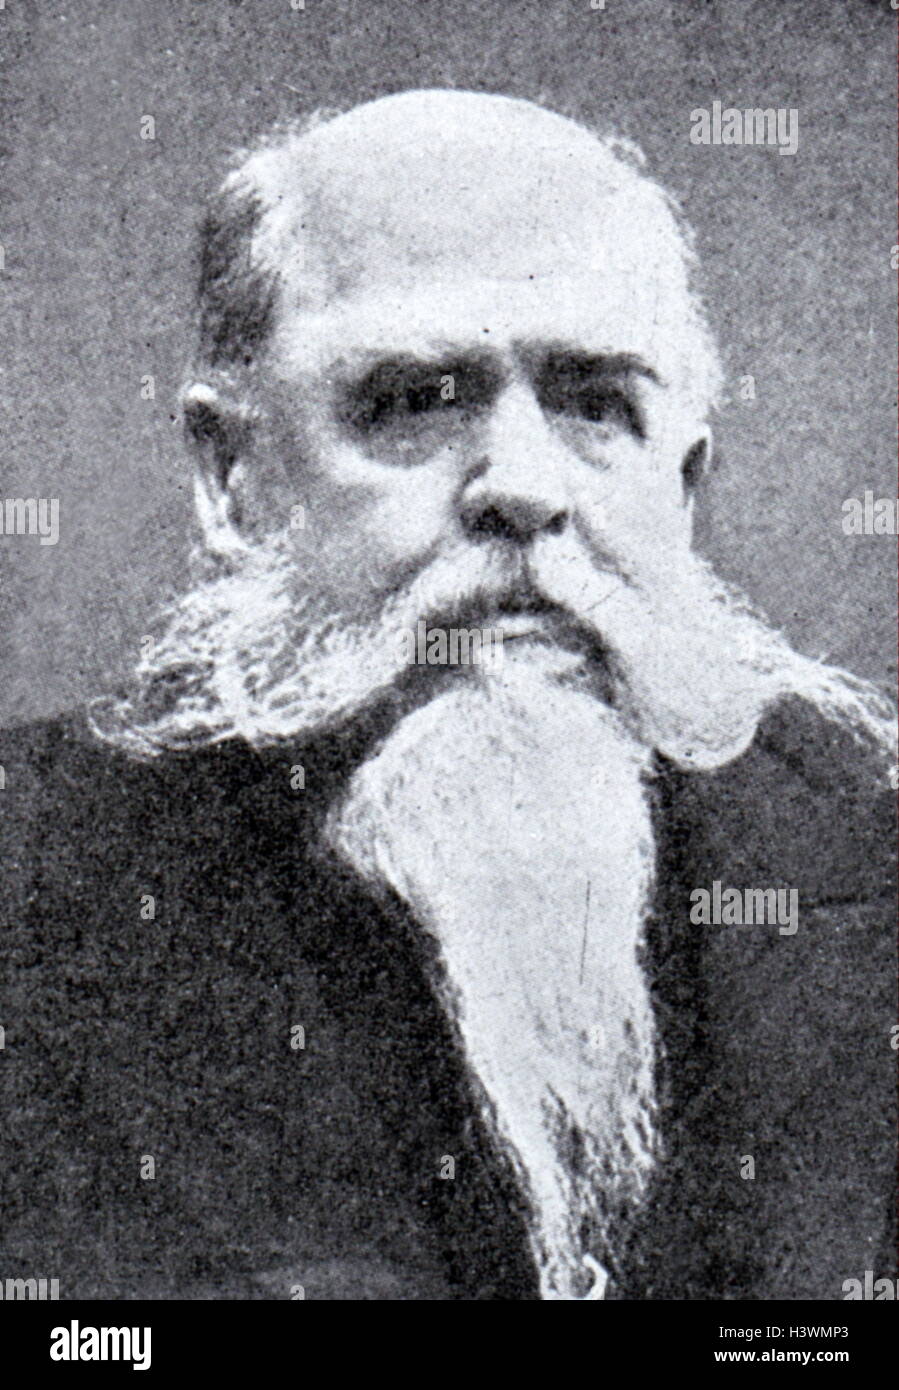 Retrato de Manuel Fernández Caballero (1835-1906), un compositor español. Fecha del siglo XIX Foto de stock